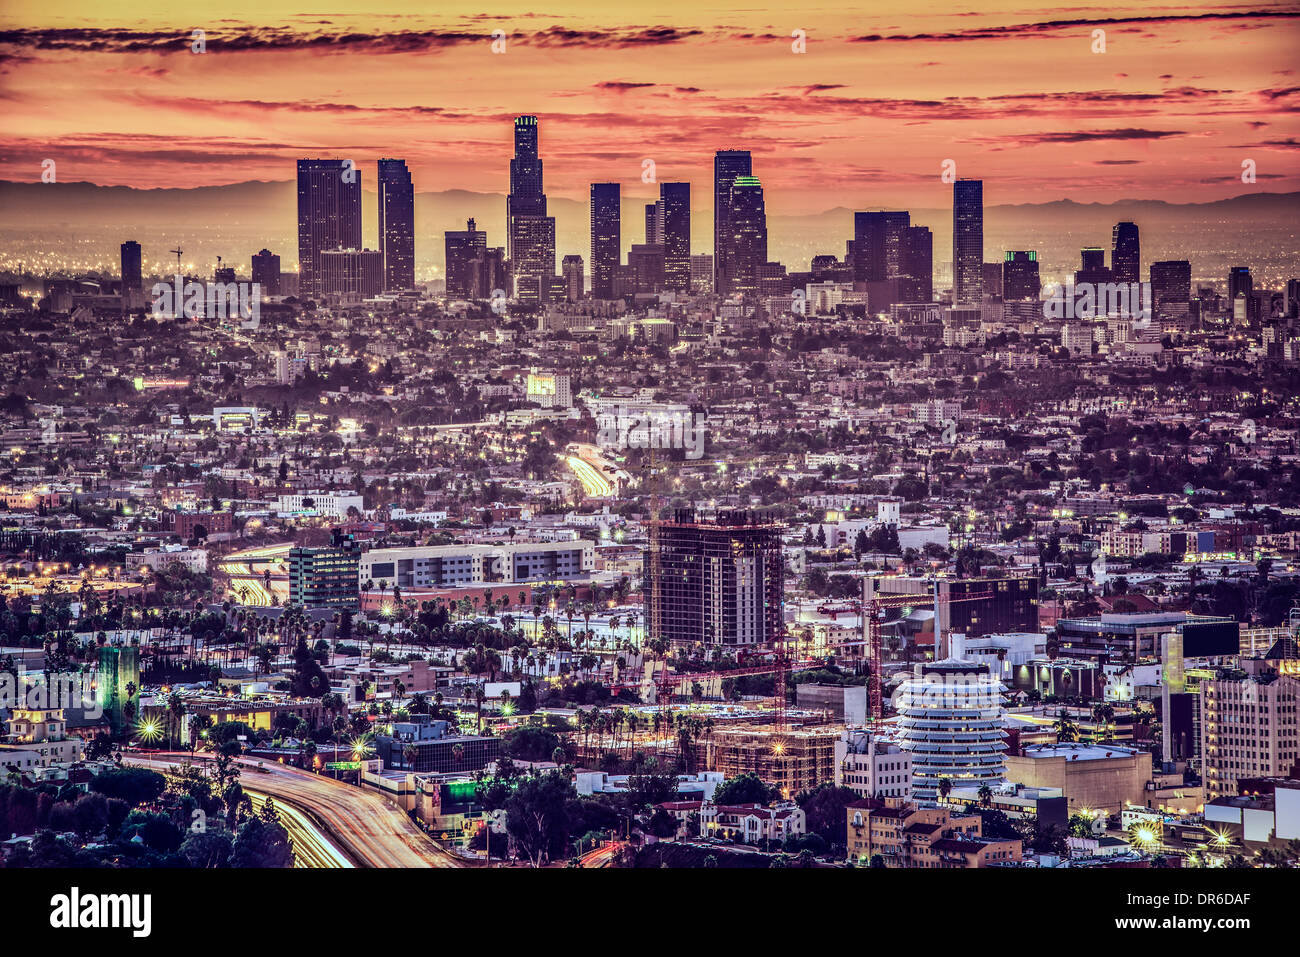 Los Angeles, Kalifornien, USA am frühen Morgen Innenstadt Stadtbild. Stockfoto